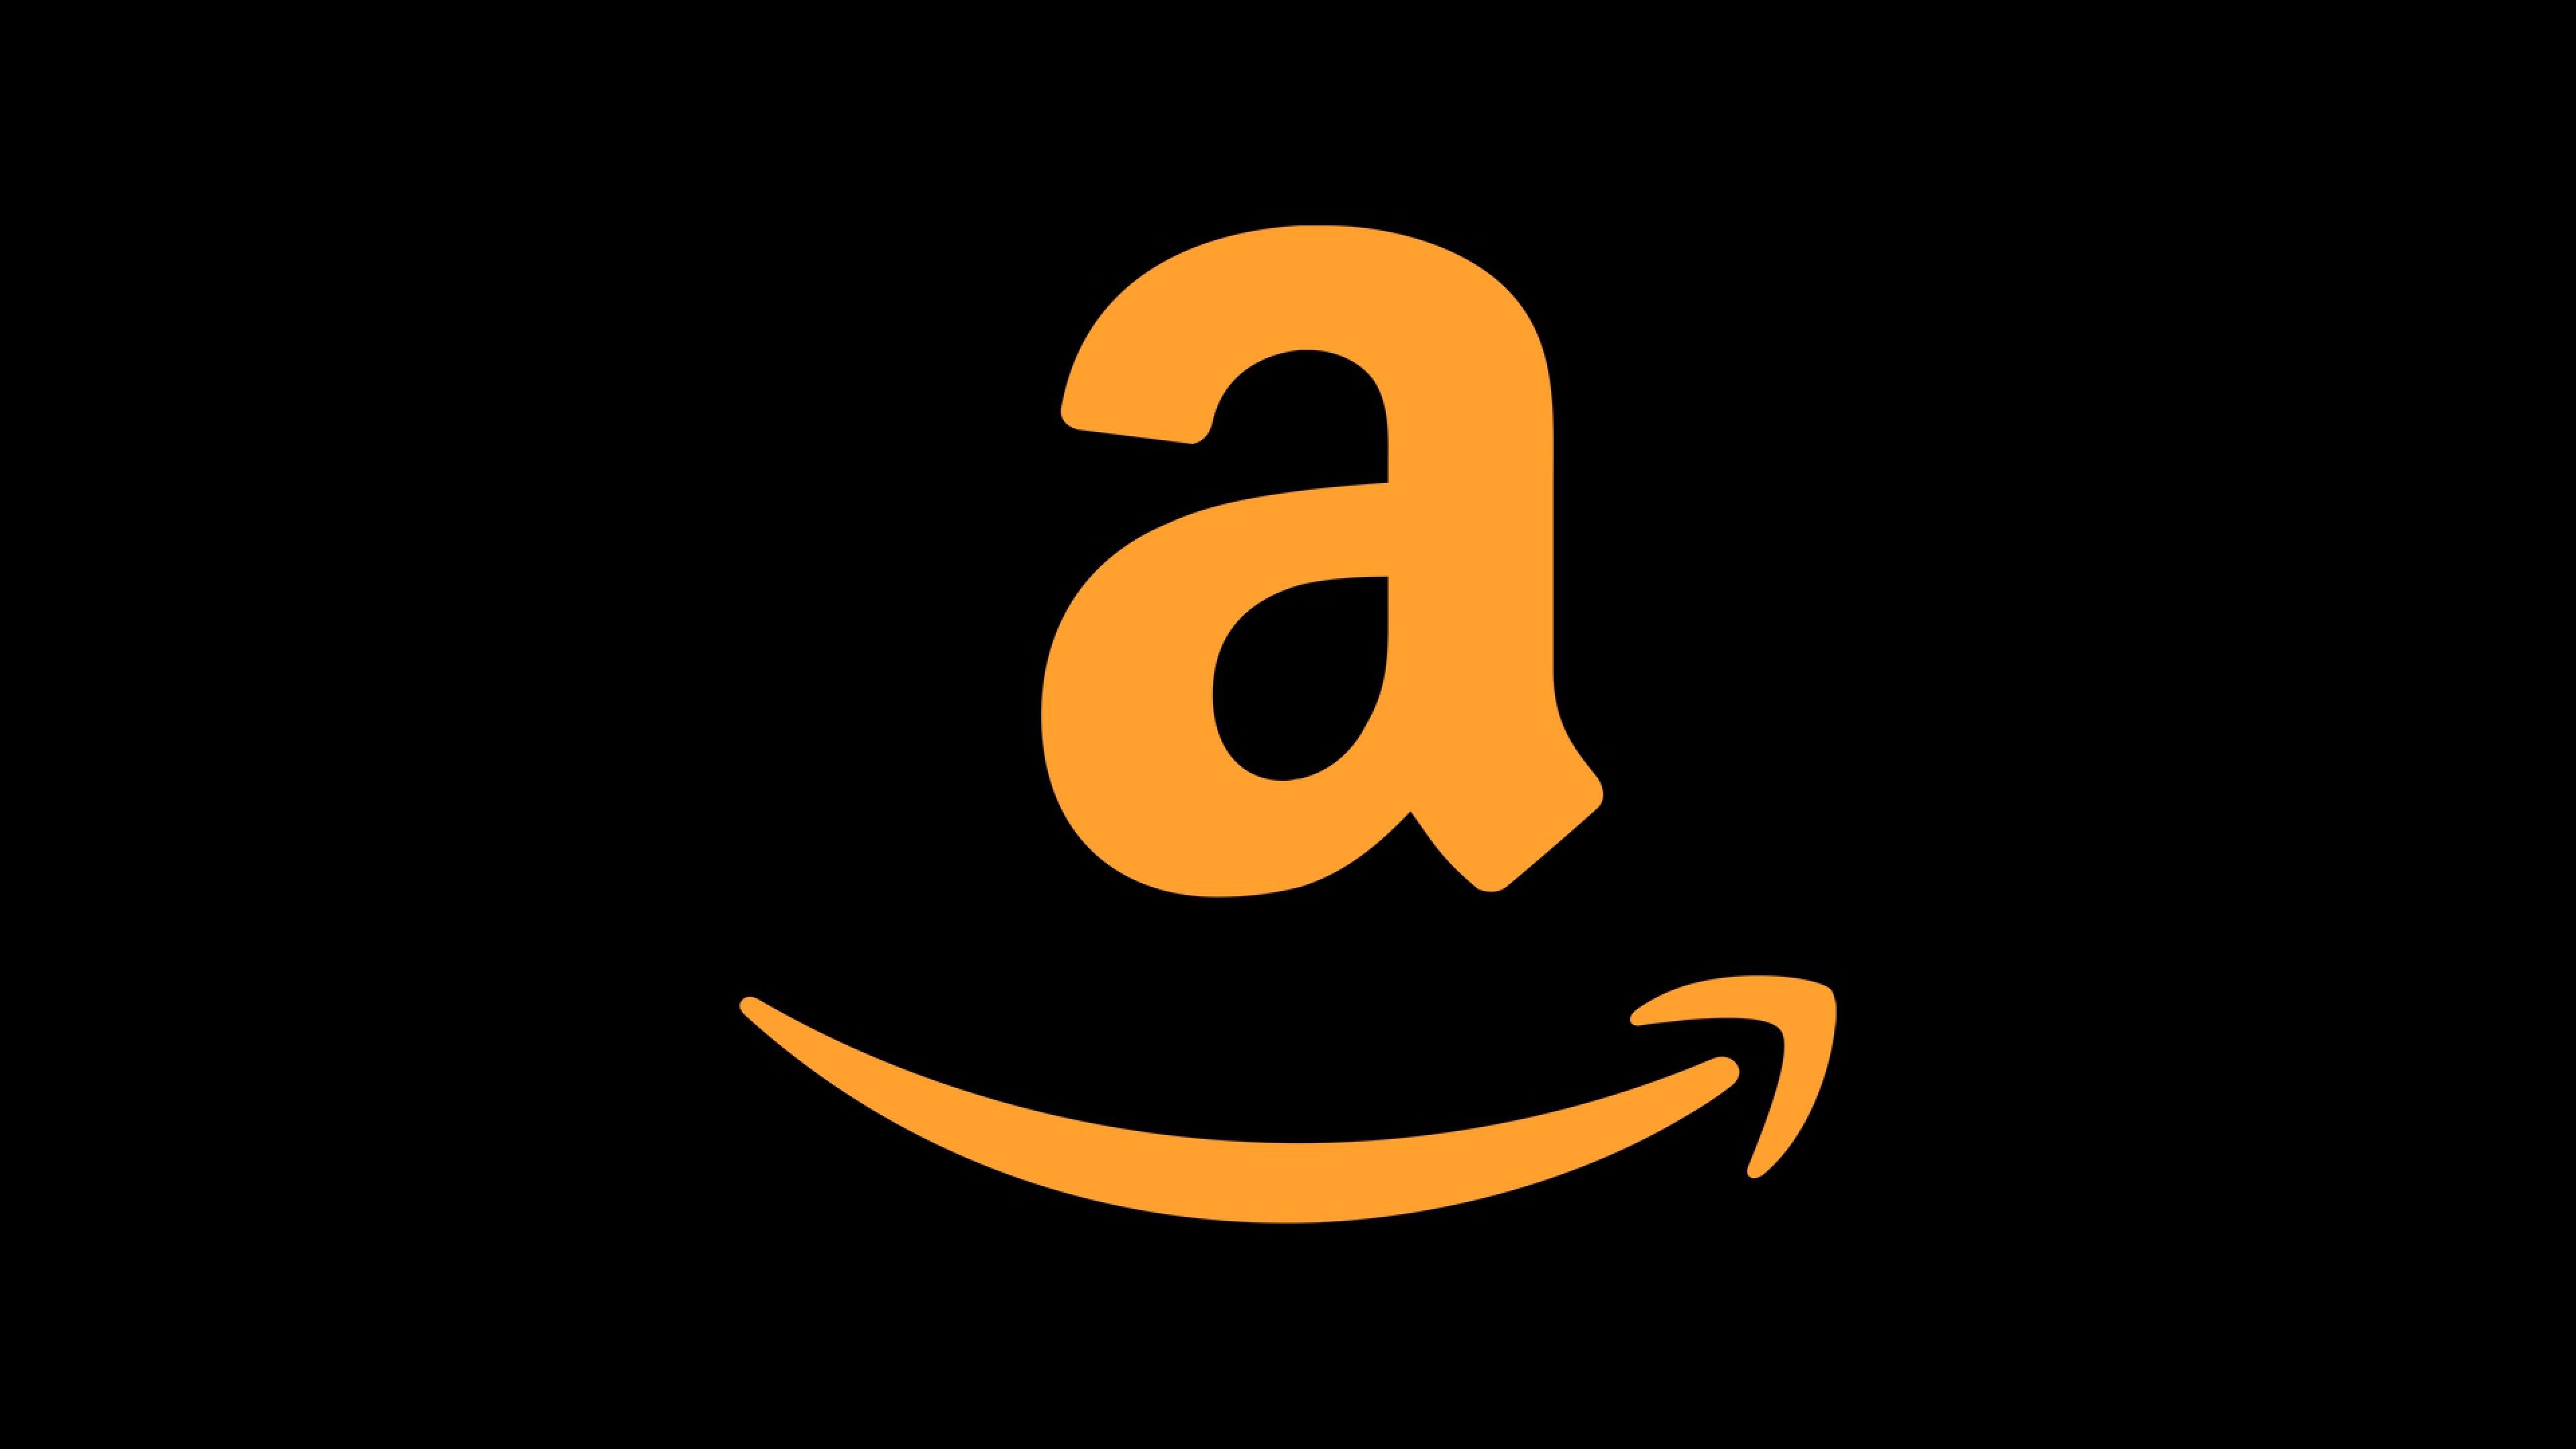  Amazon Hintergrundbild 3840x2160. Amazon Logo Wallpaper Free Amazon Logo Background